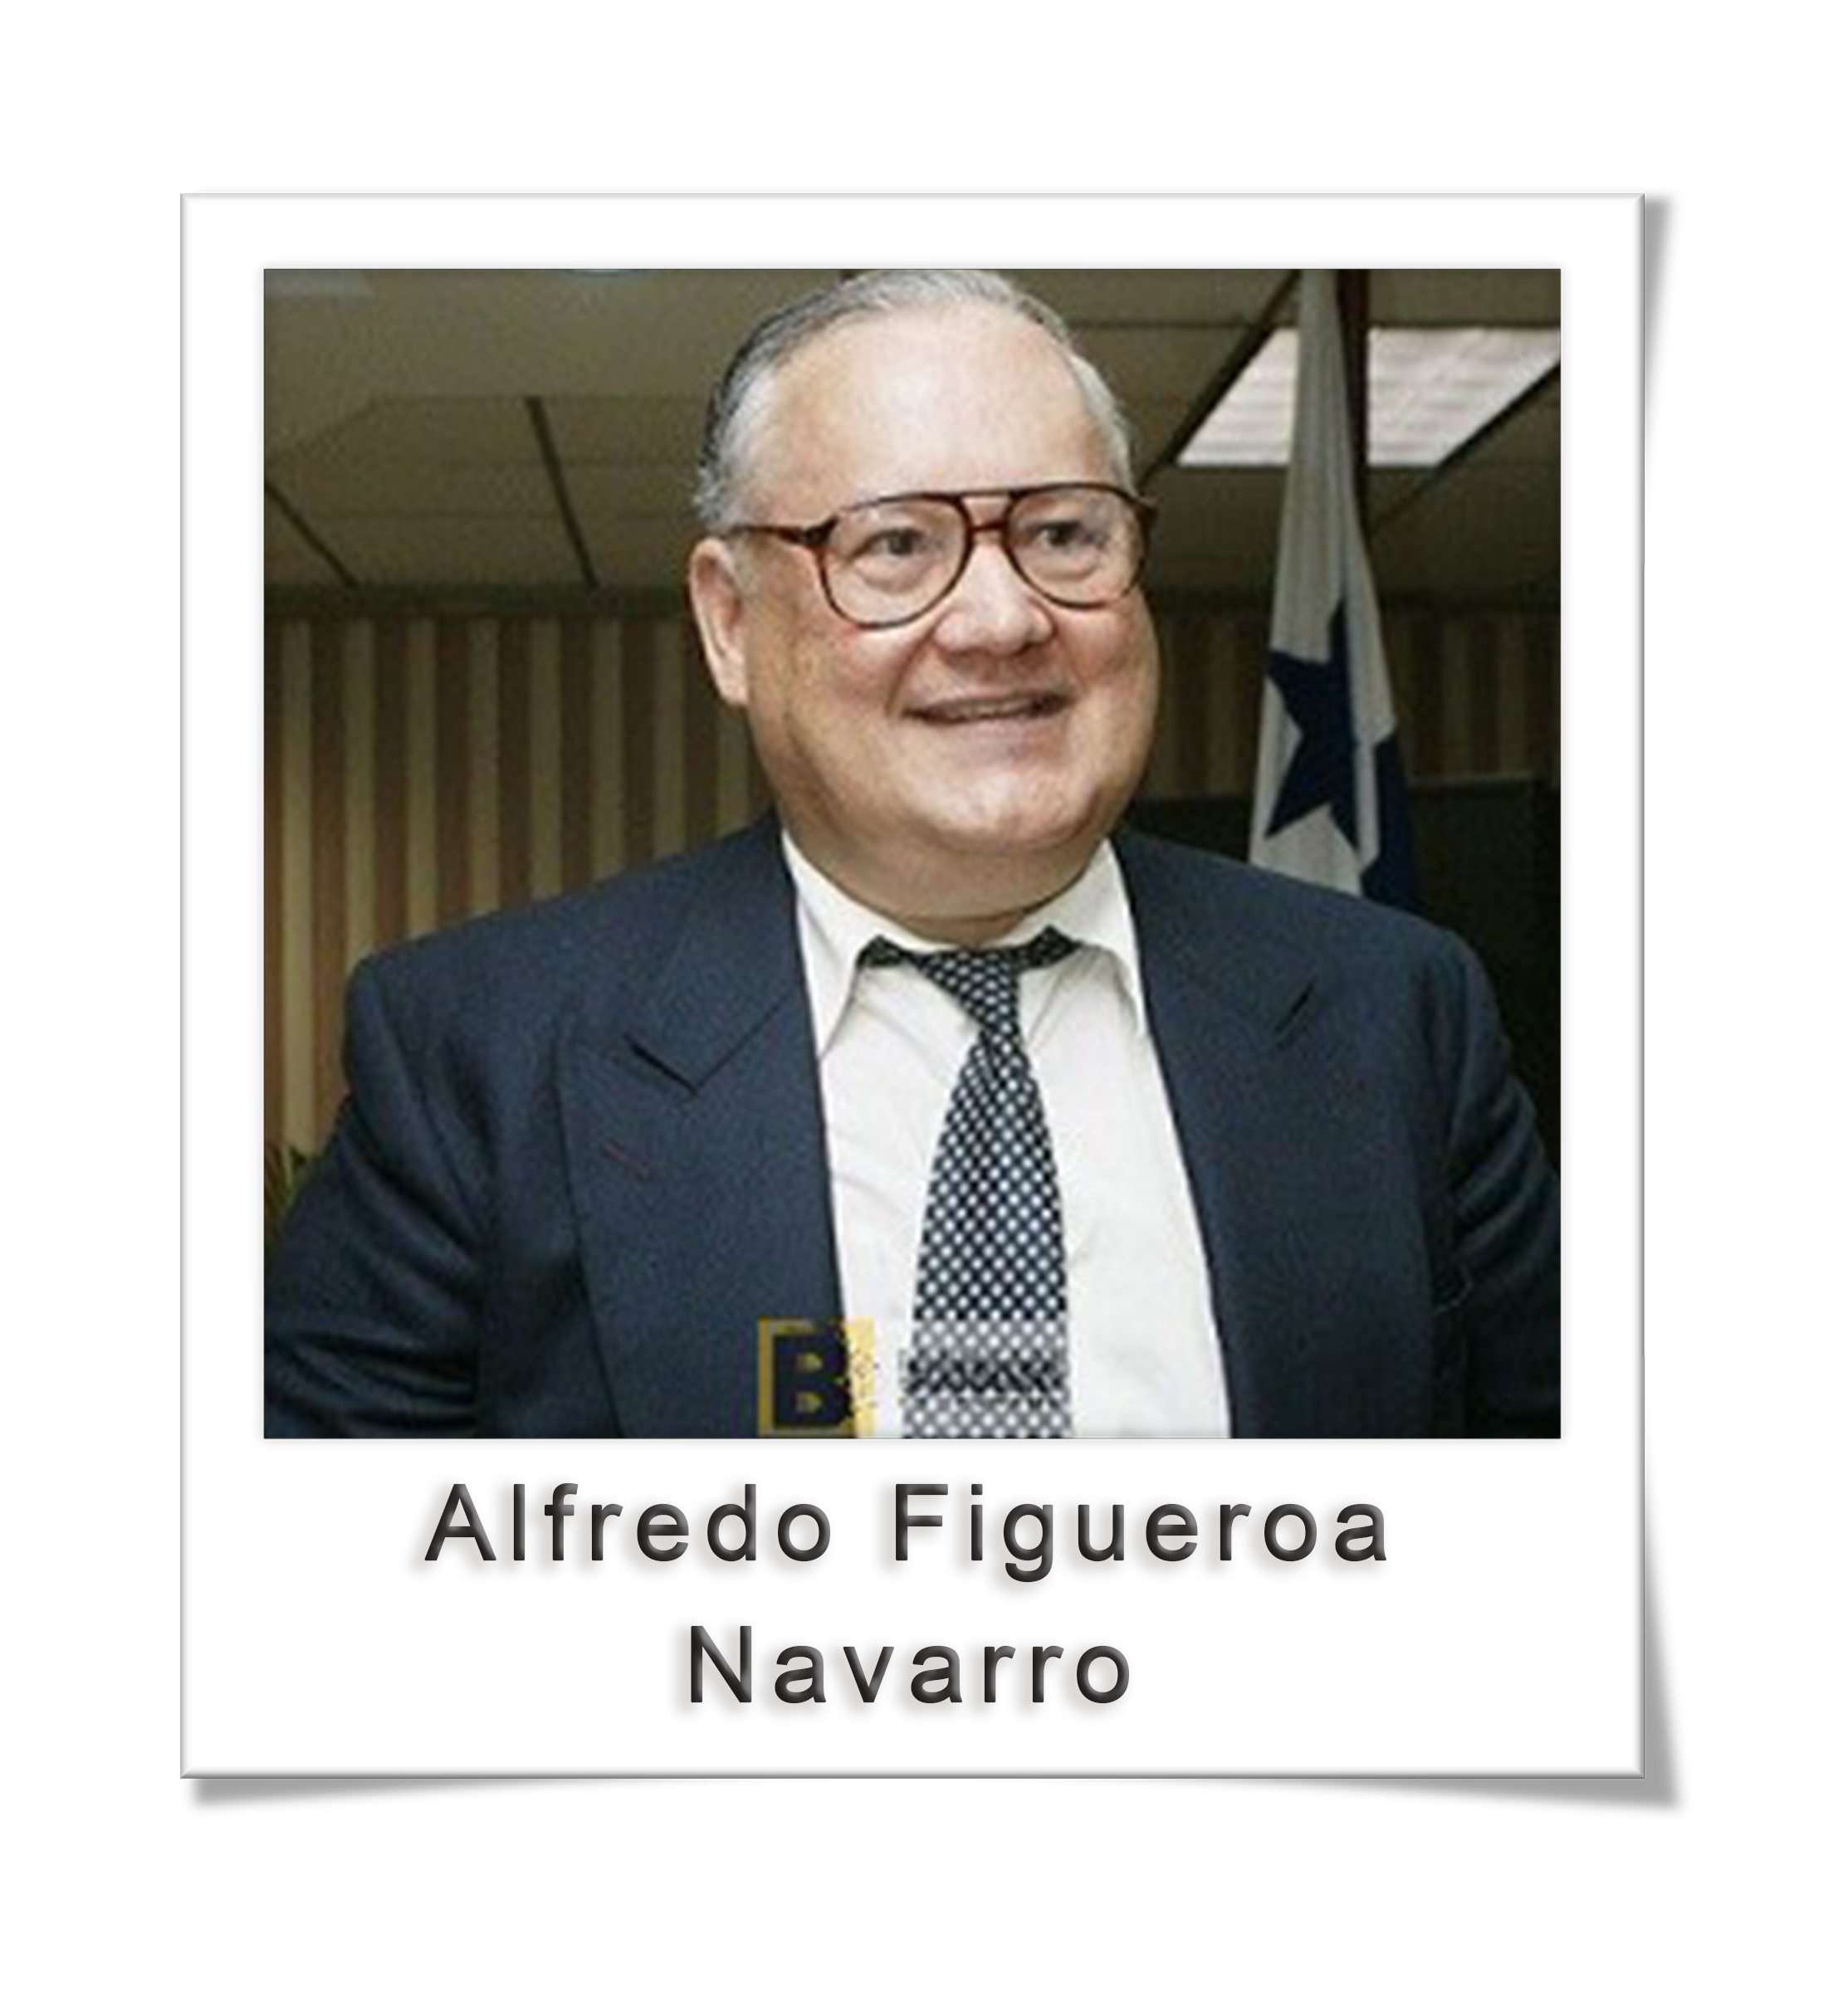 Alfredo Figueroa Navarro | Foto: Biblioteca Nacional